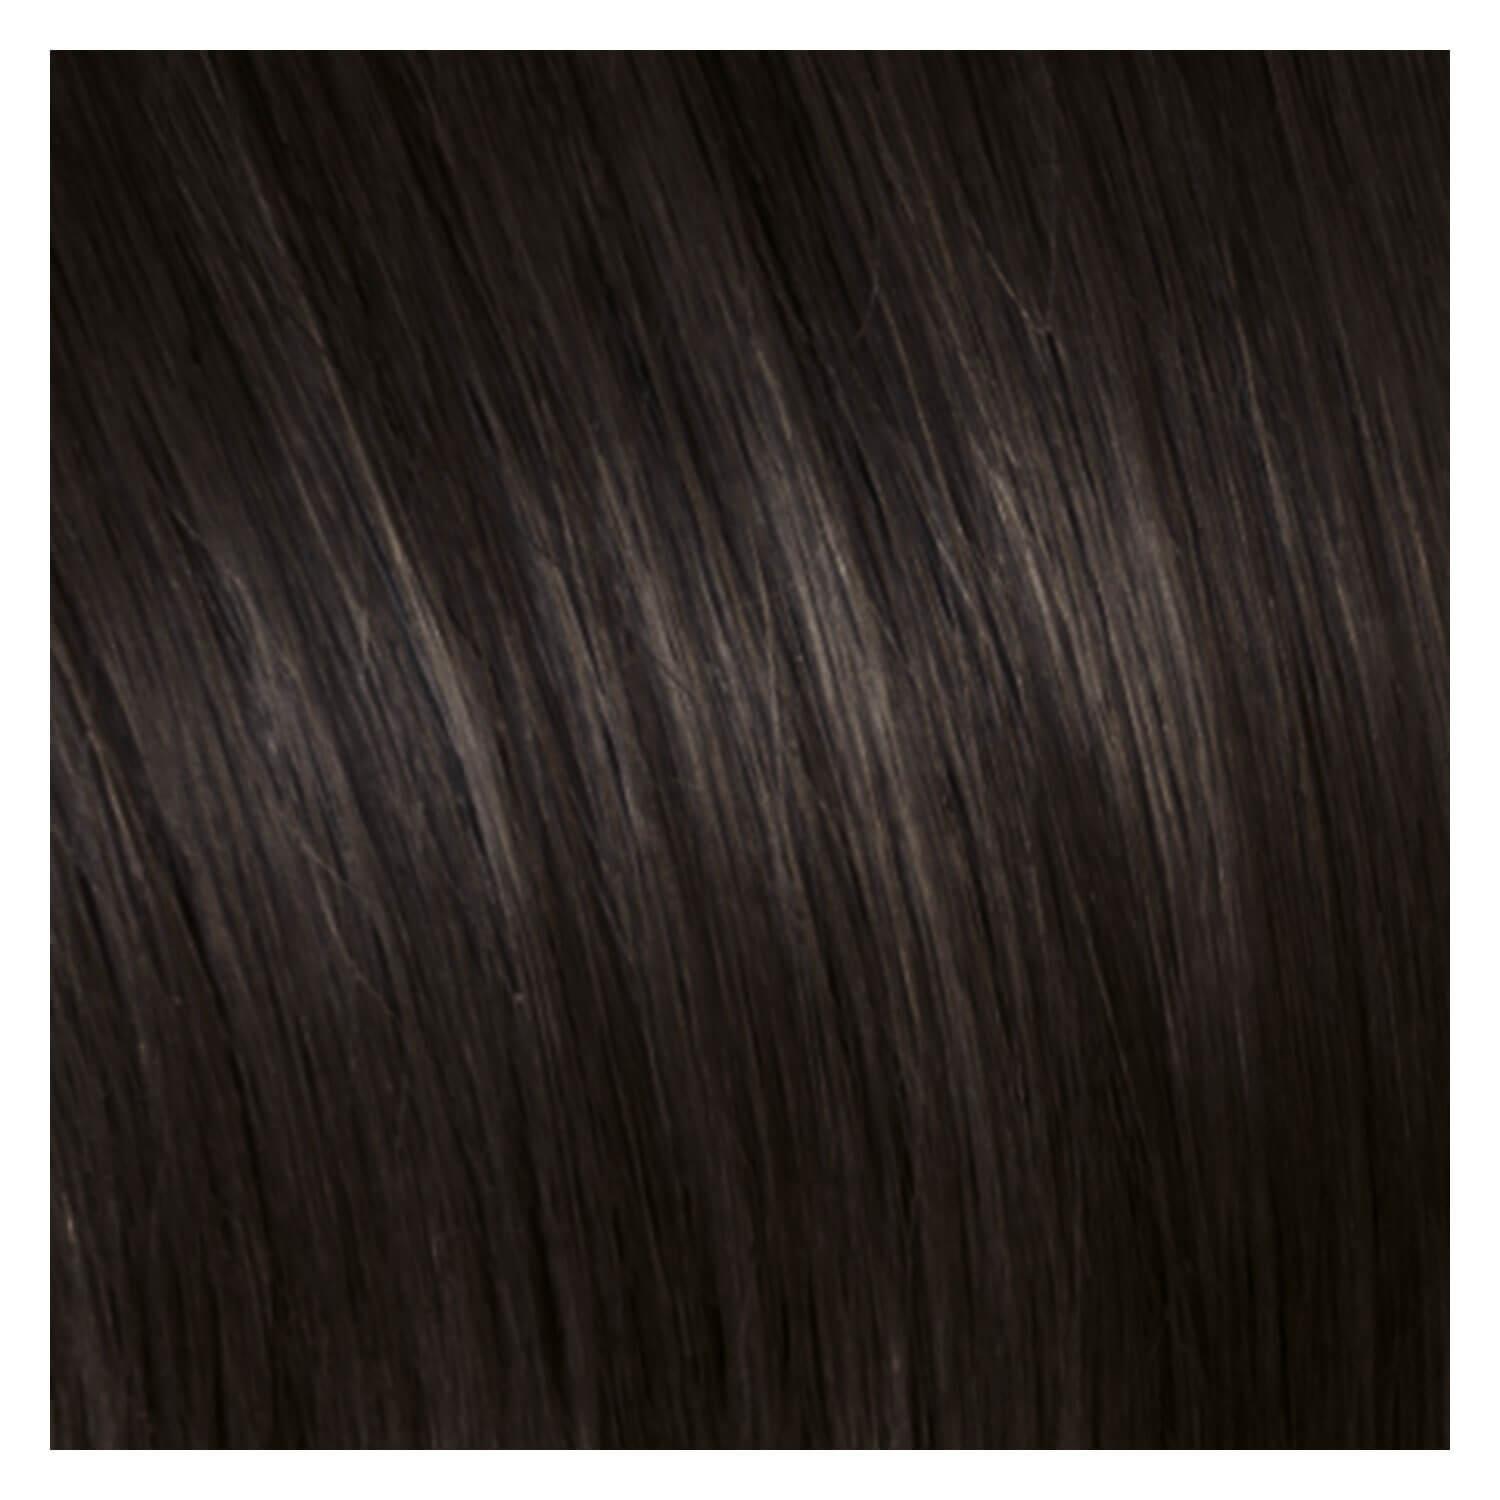 SHE Bonding-System Hair Extensions Wavy - 4 Marron 55/60cm